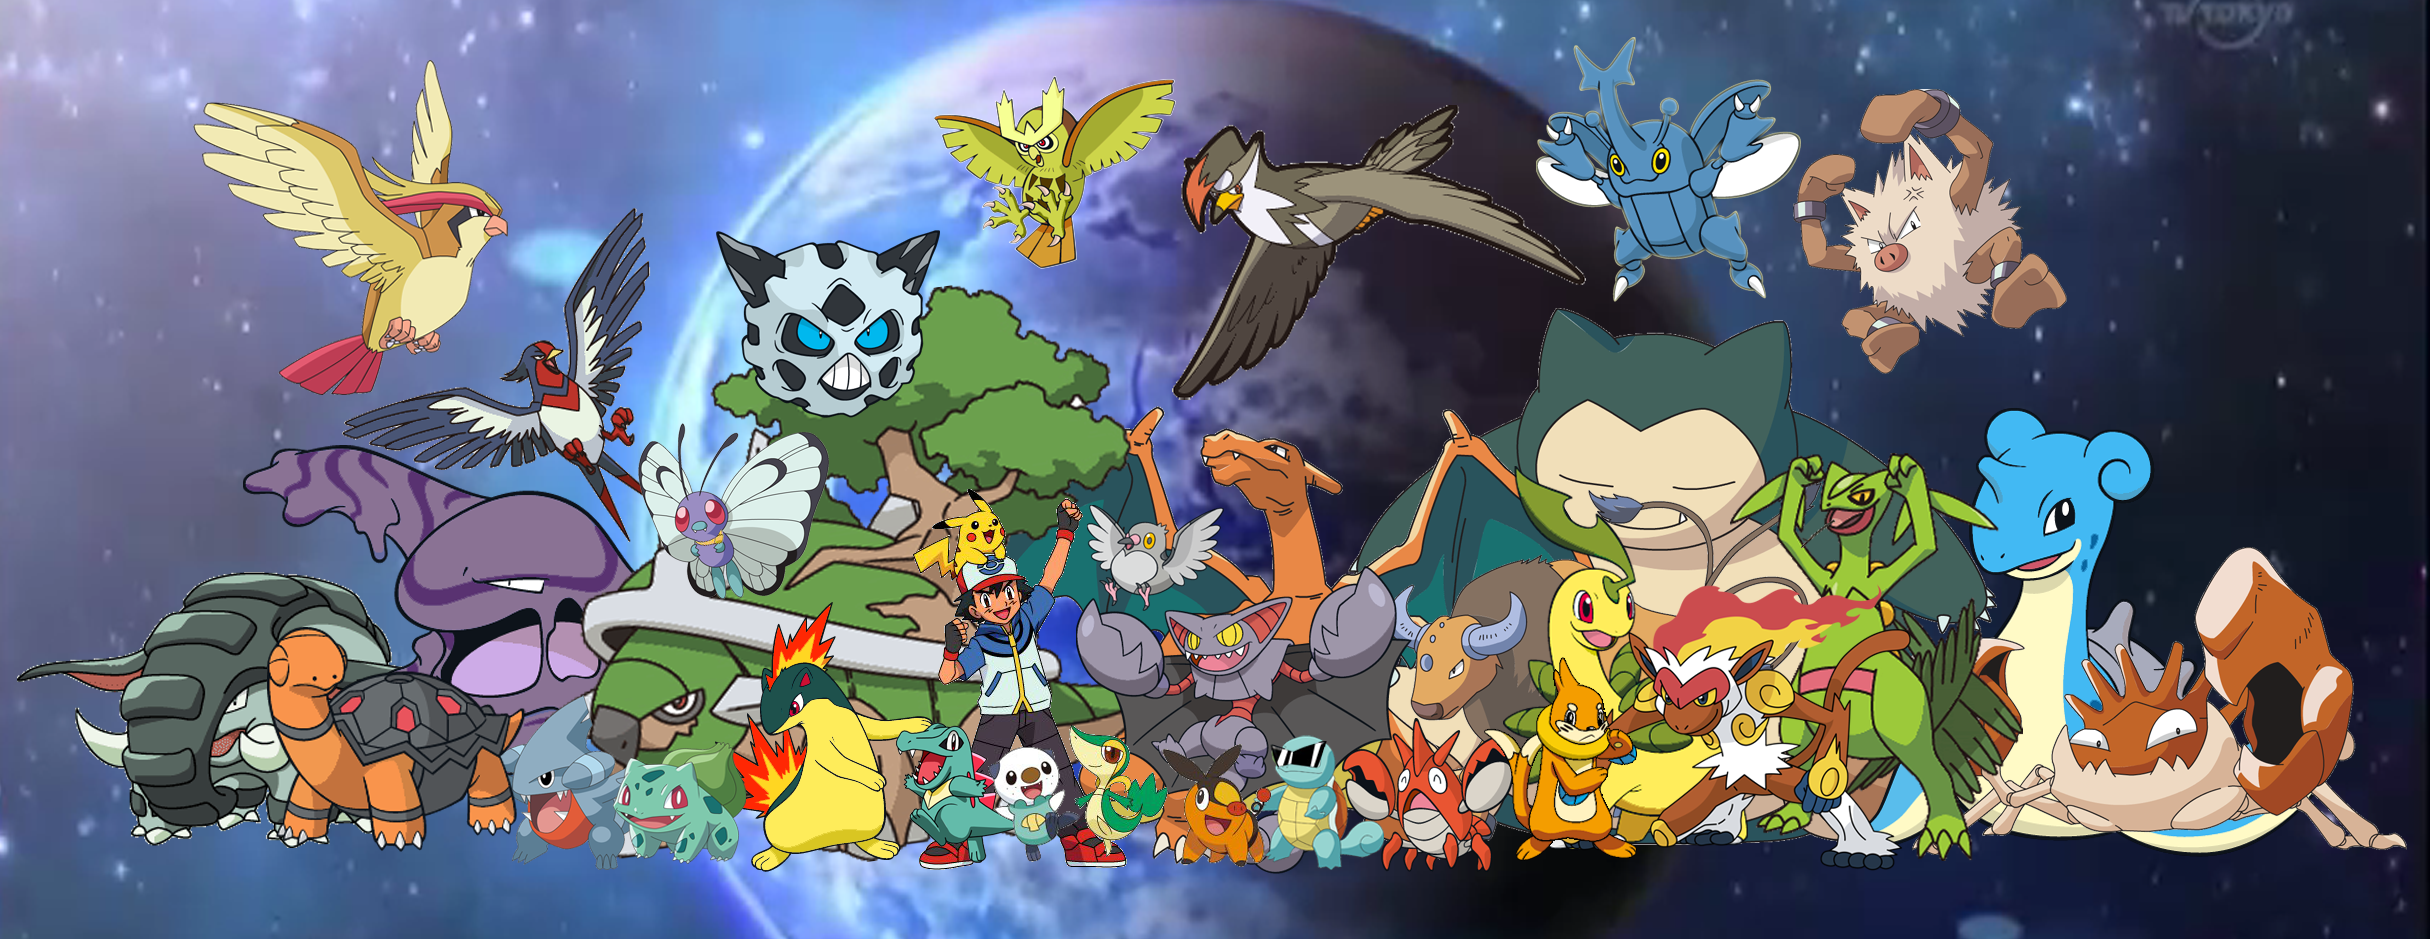 Complete List of Ash Ketchum’s Pokemon